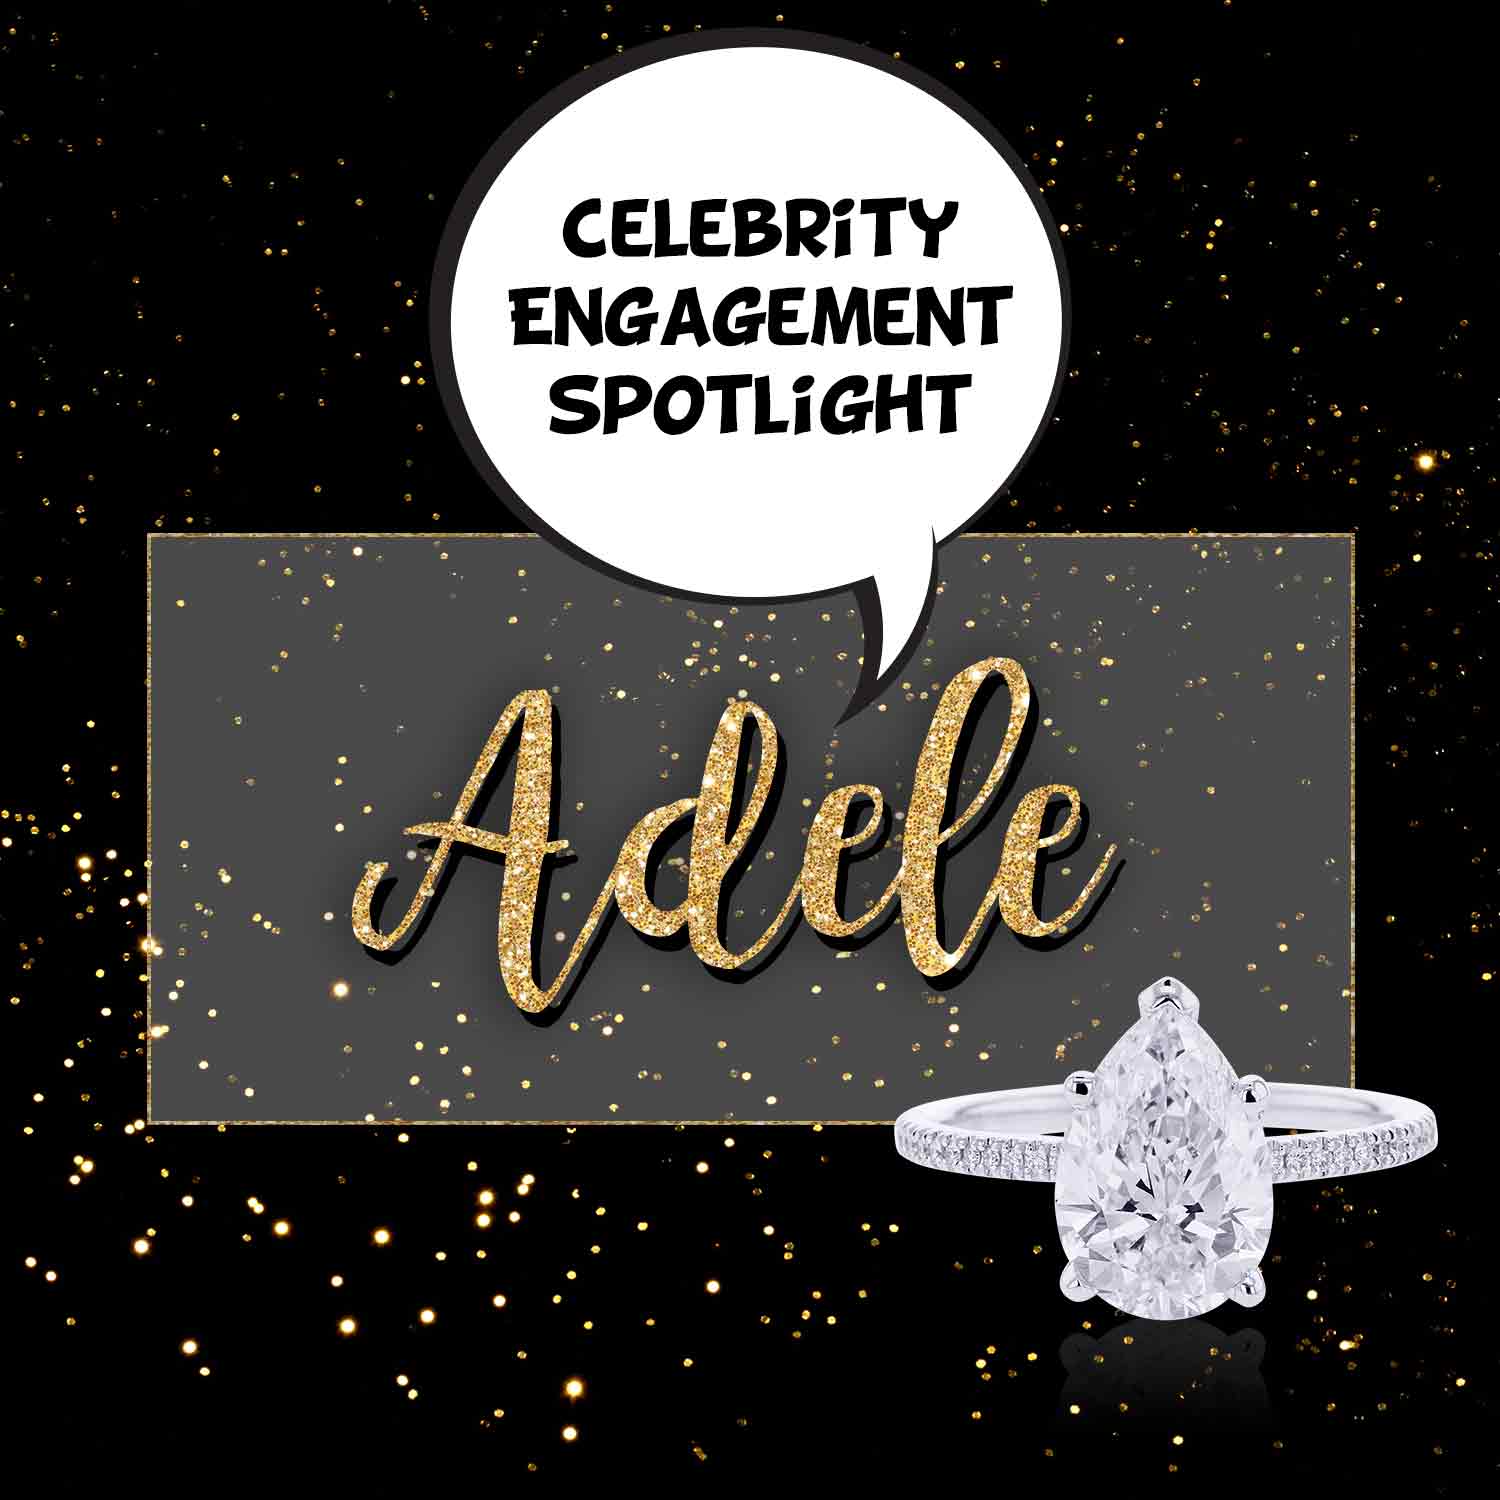 Celebrity engagement spotlight, Adele.